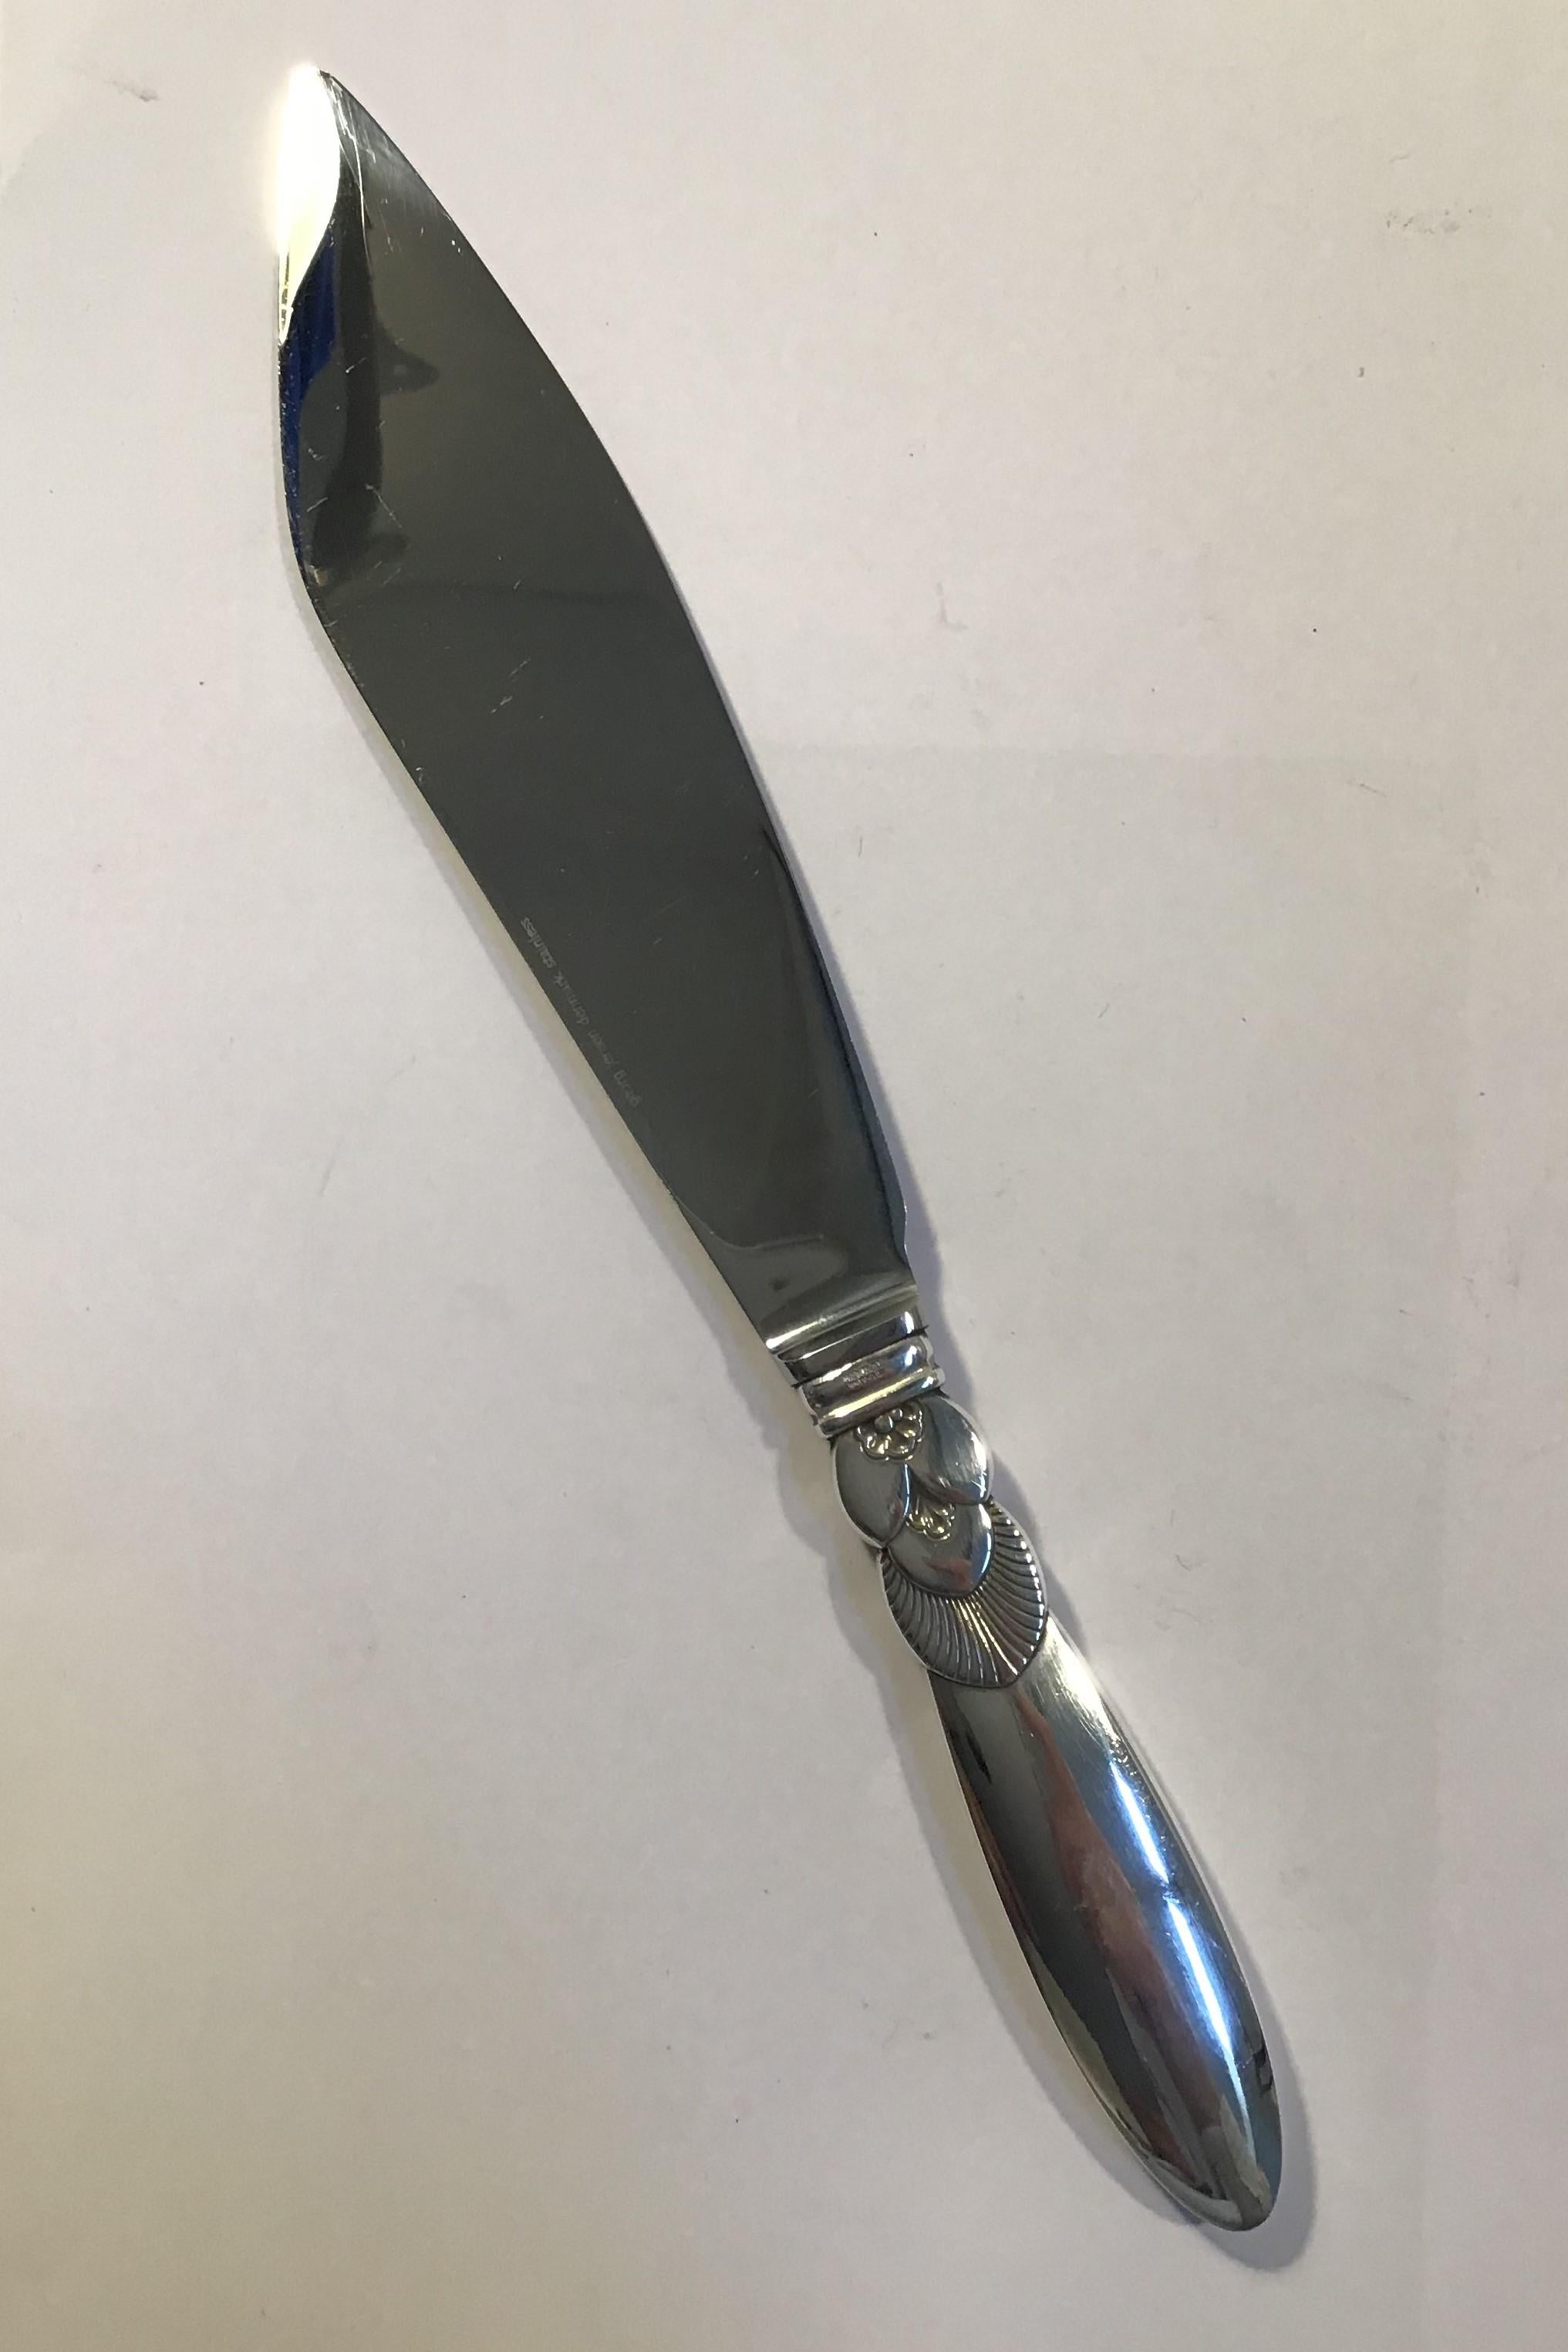 Georg Jensen cactus sterling silver cake knife no 196. Measures 26.2 cm (10 1/2